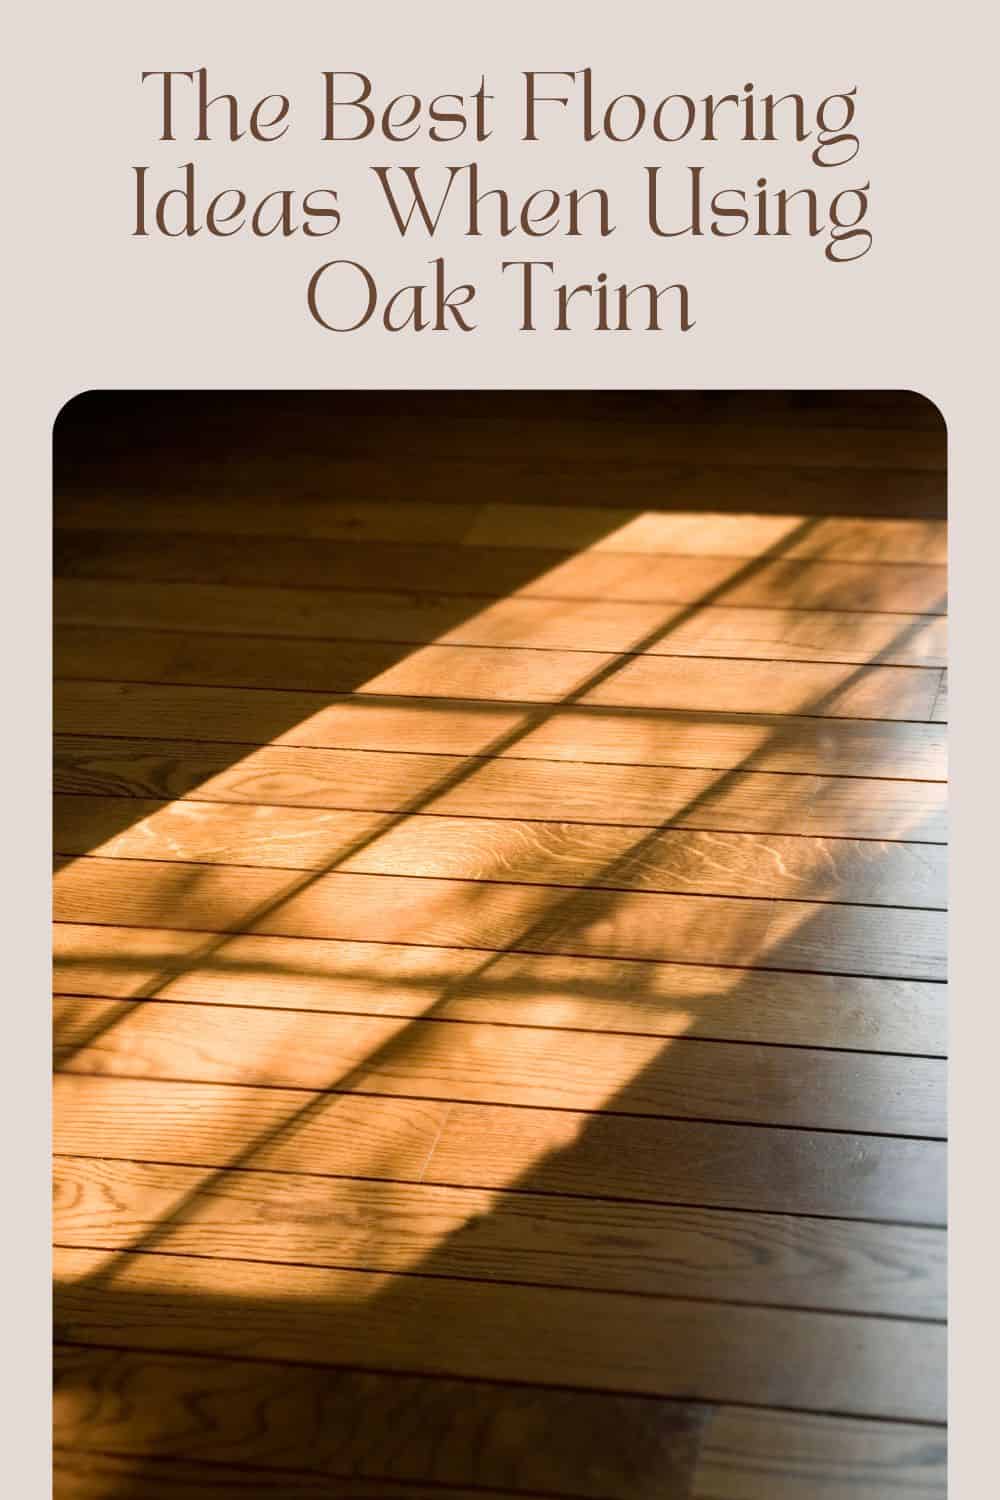 The Best Flooring Ideas When Using Oak Trim